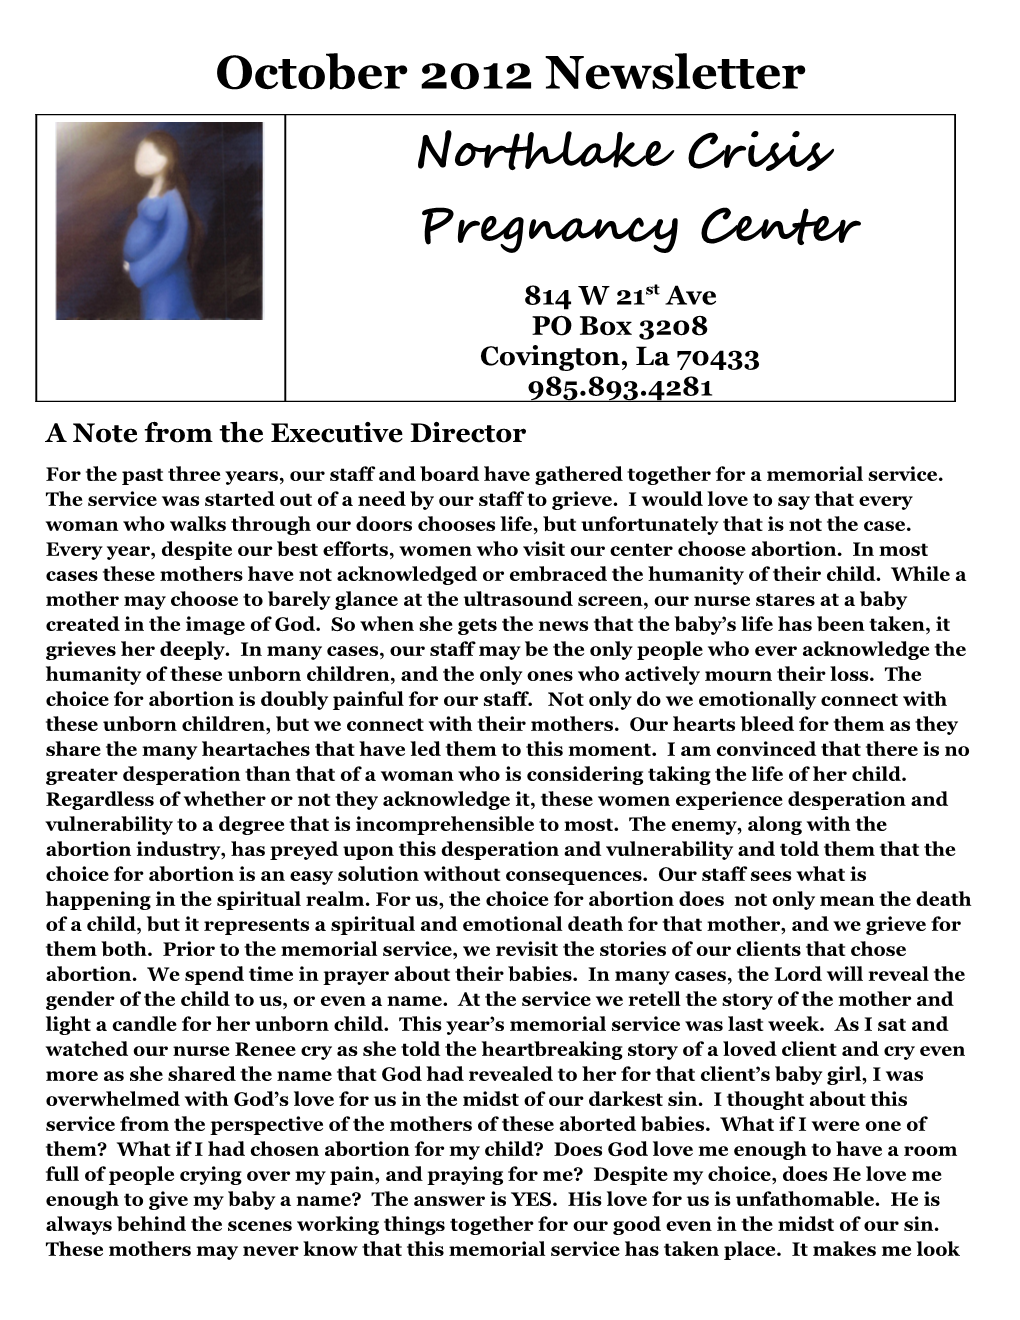 Northlake Crisis Pregnancy Center